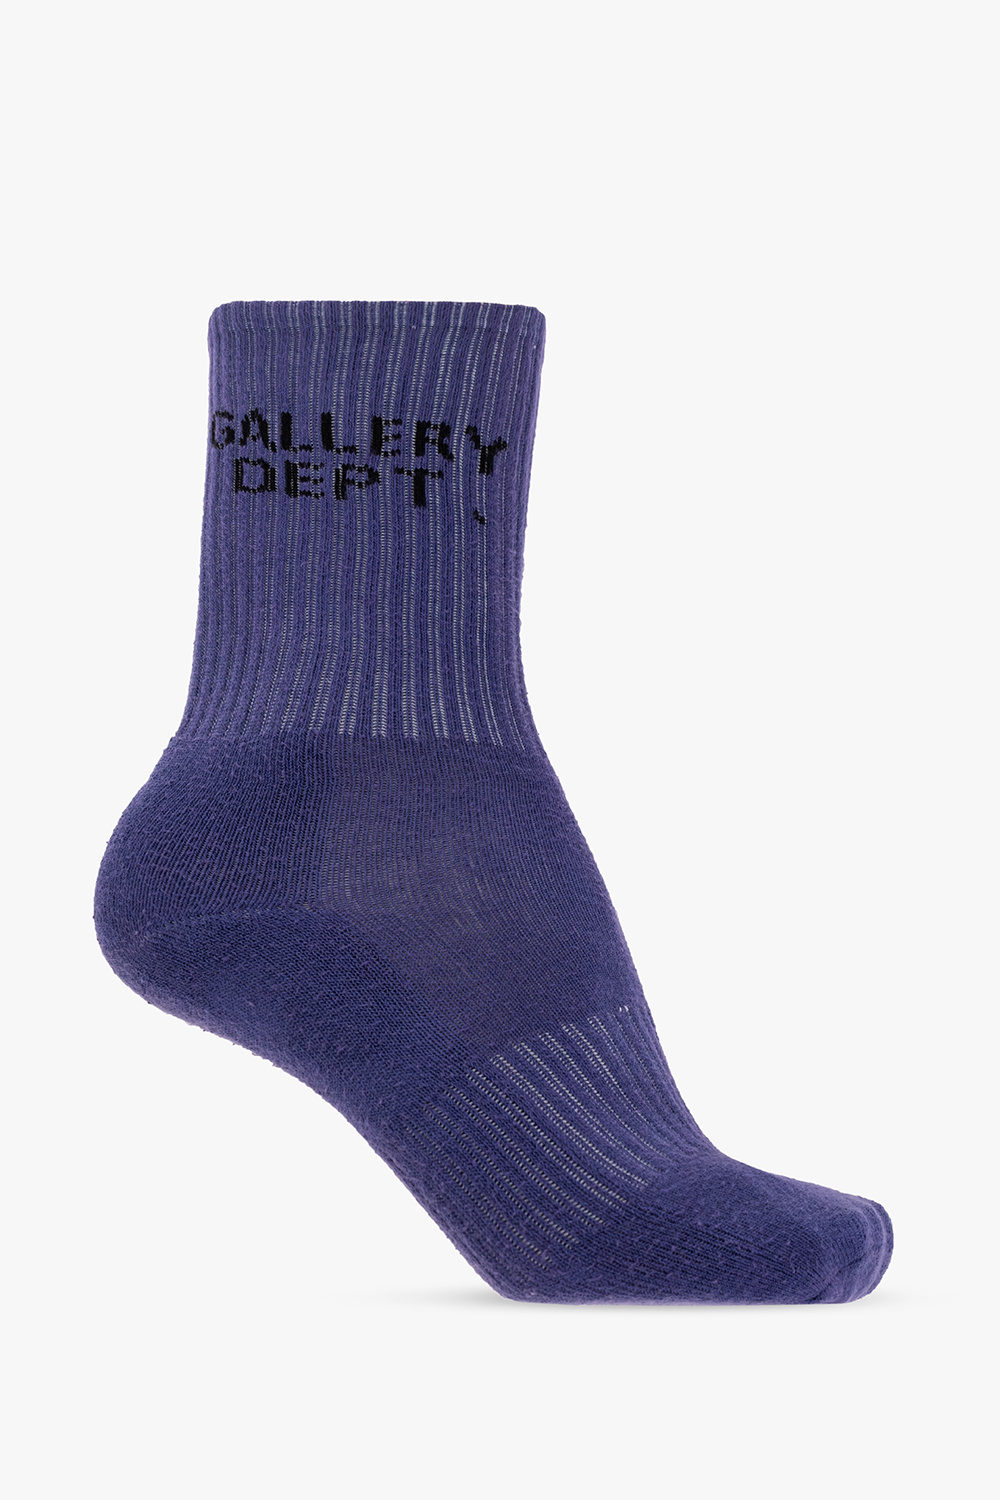 gallery dept logo socks purple - レッグウェア